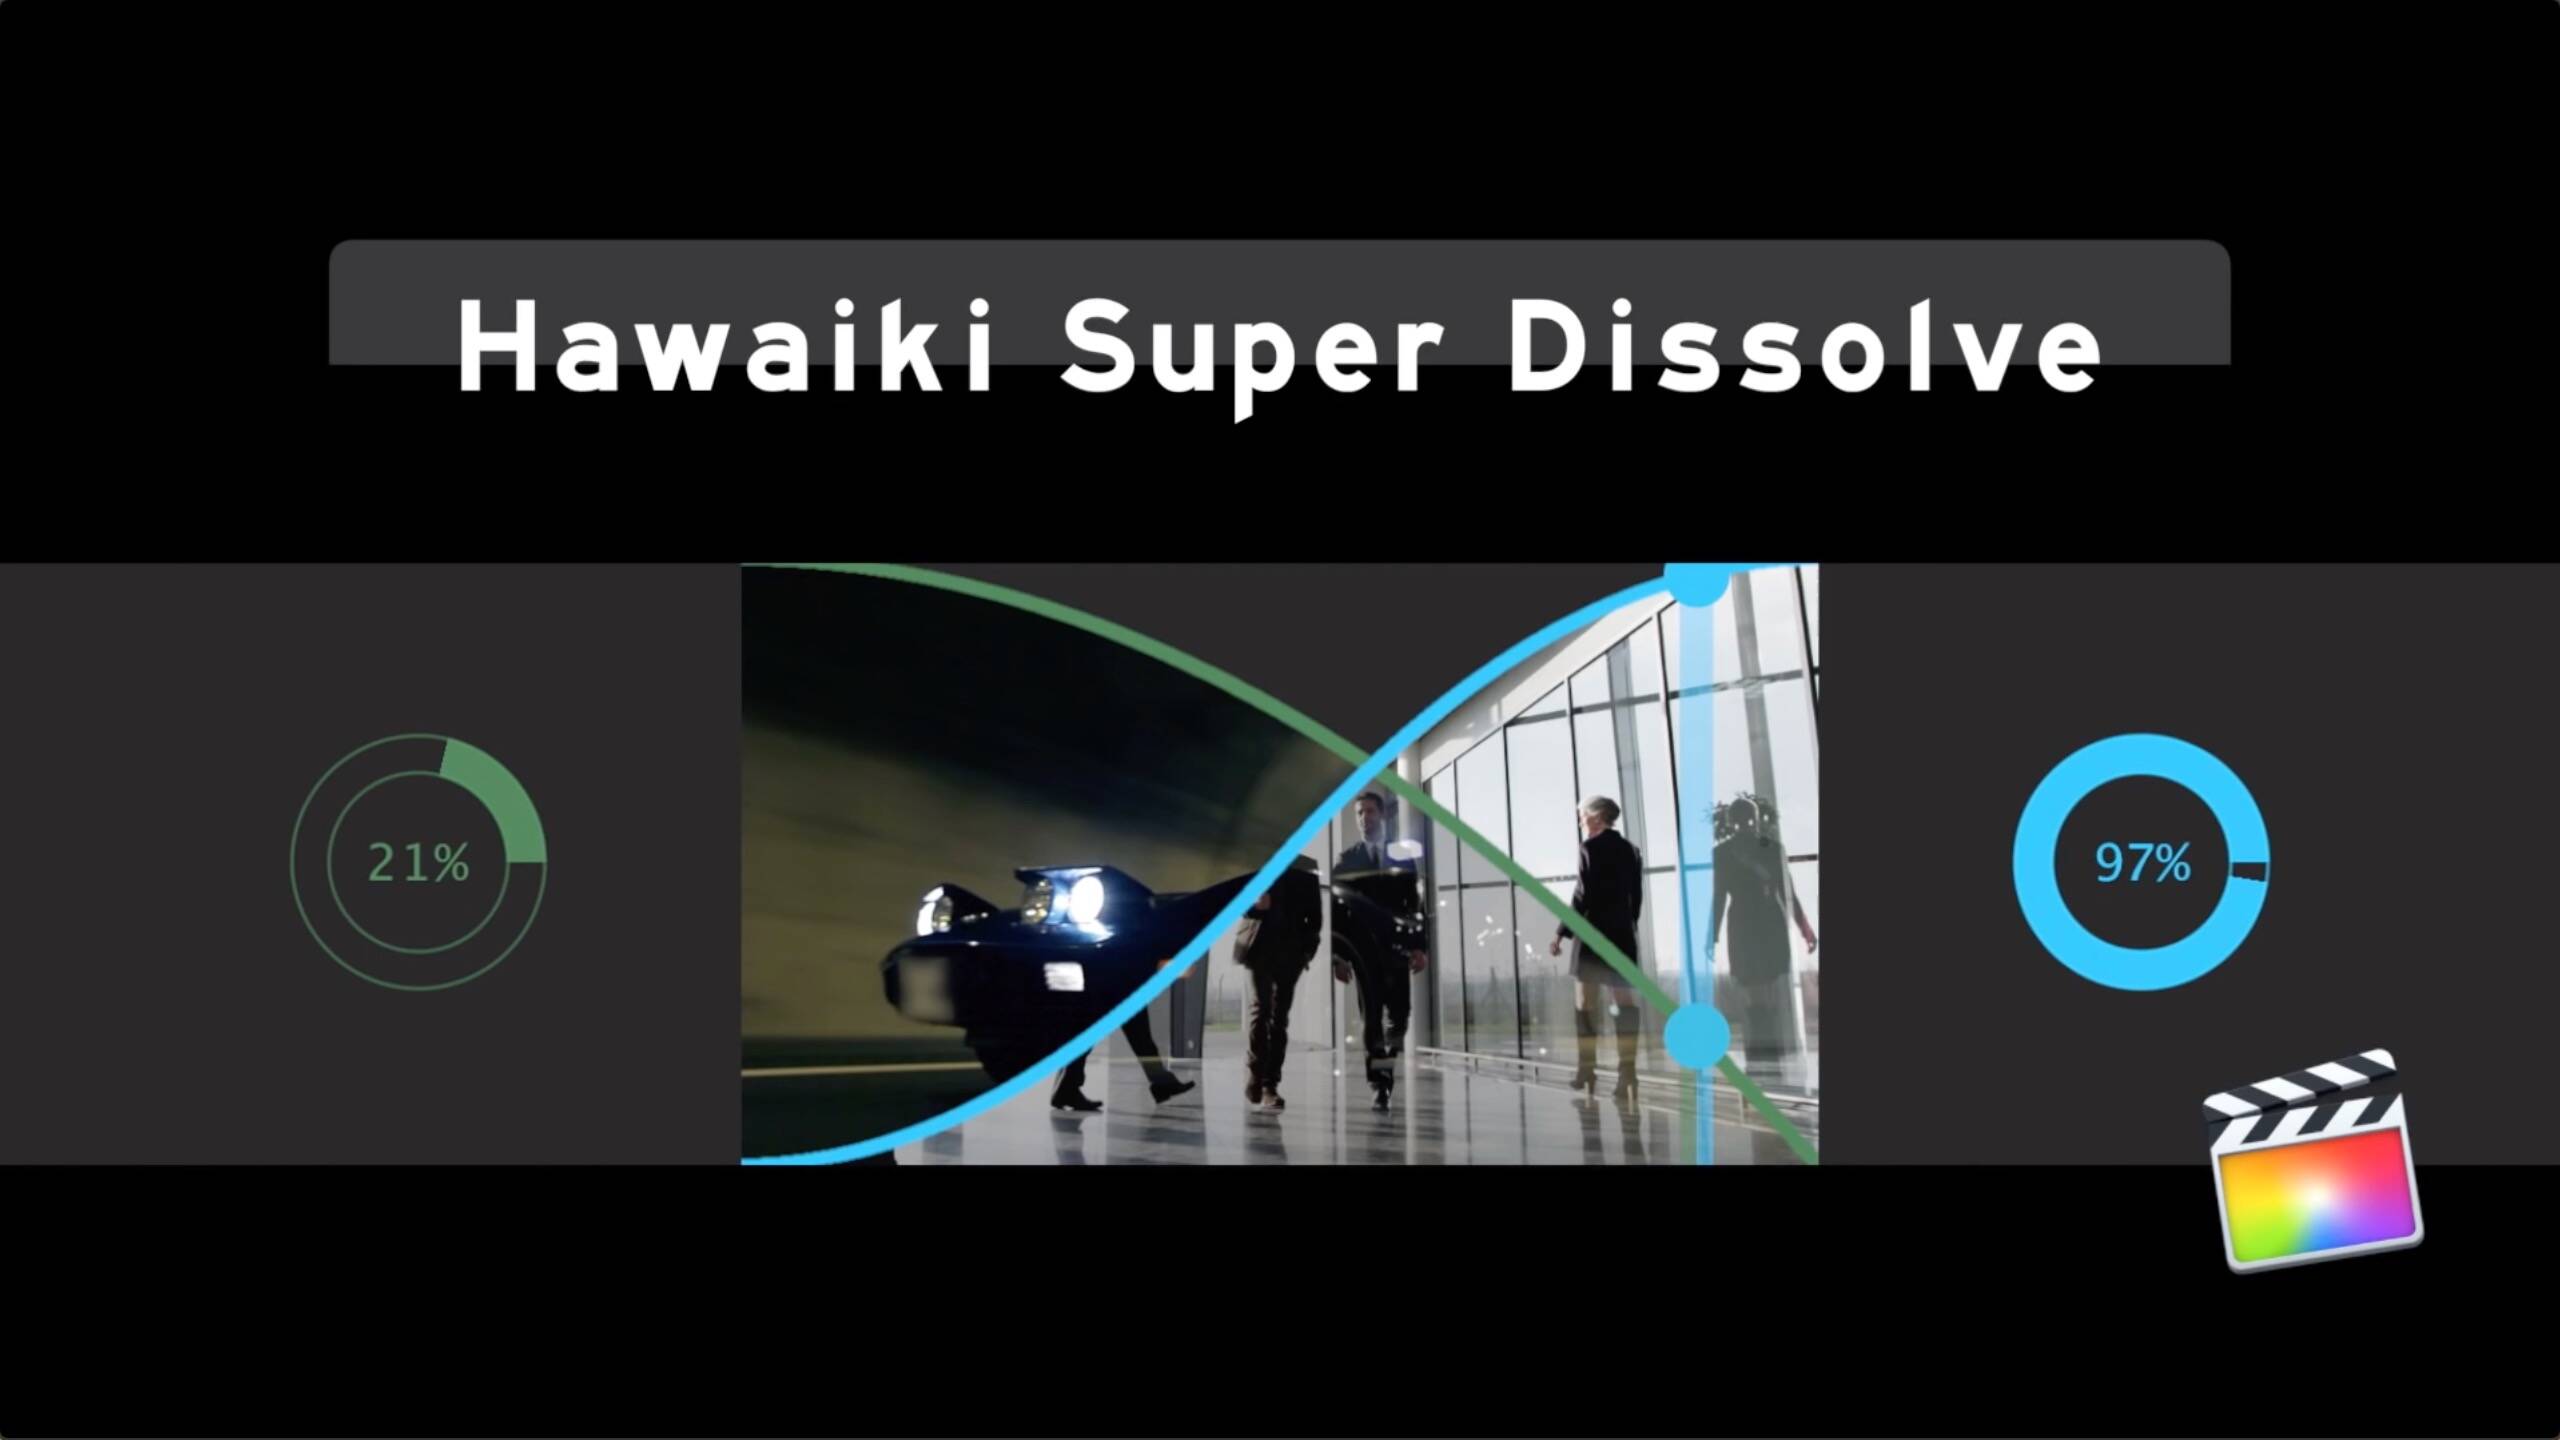 fcpx插件:Hawaiki Super Dissolve (溶解转场过渡)